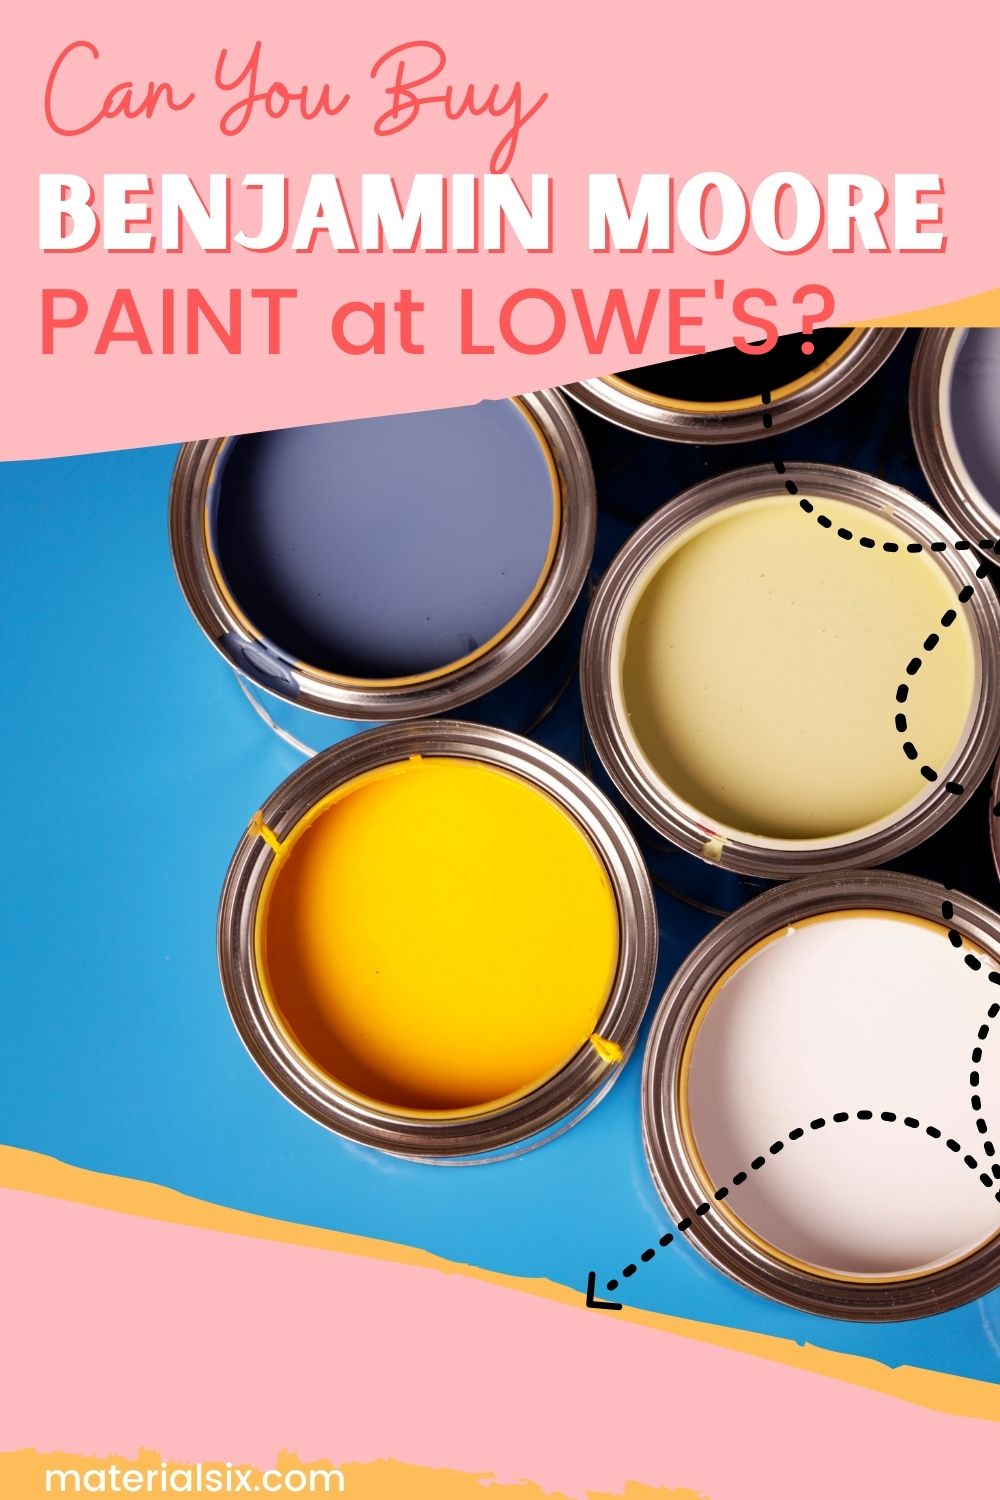 Can You Buy Benjamin Moore Paint at Lowe's